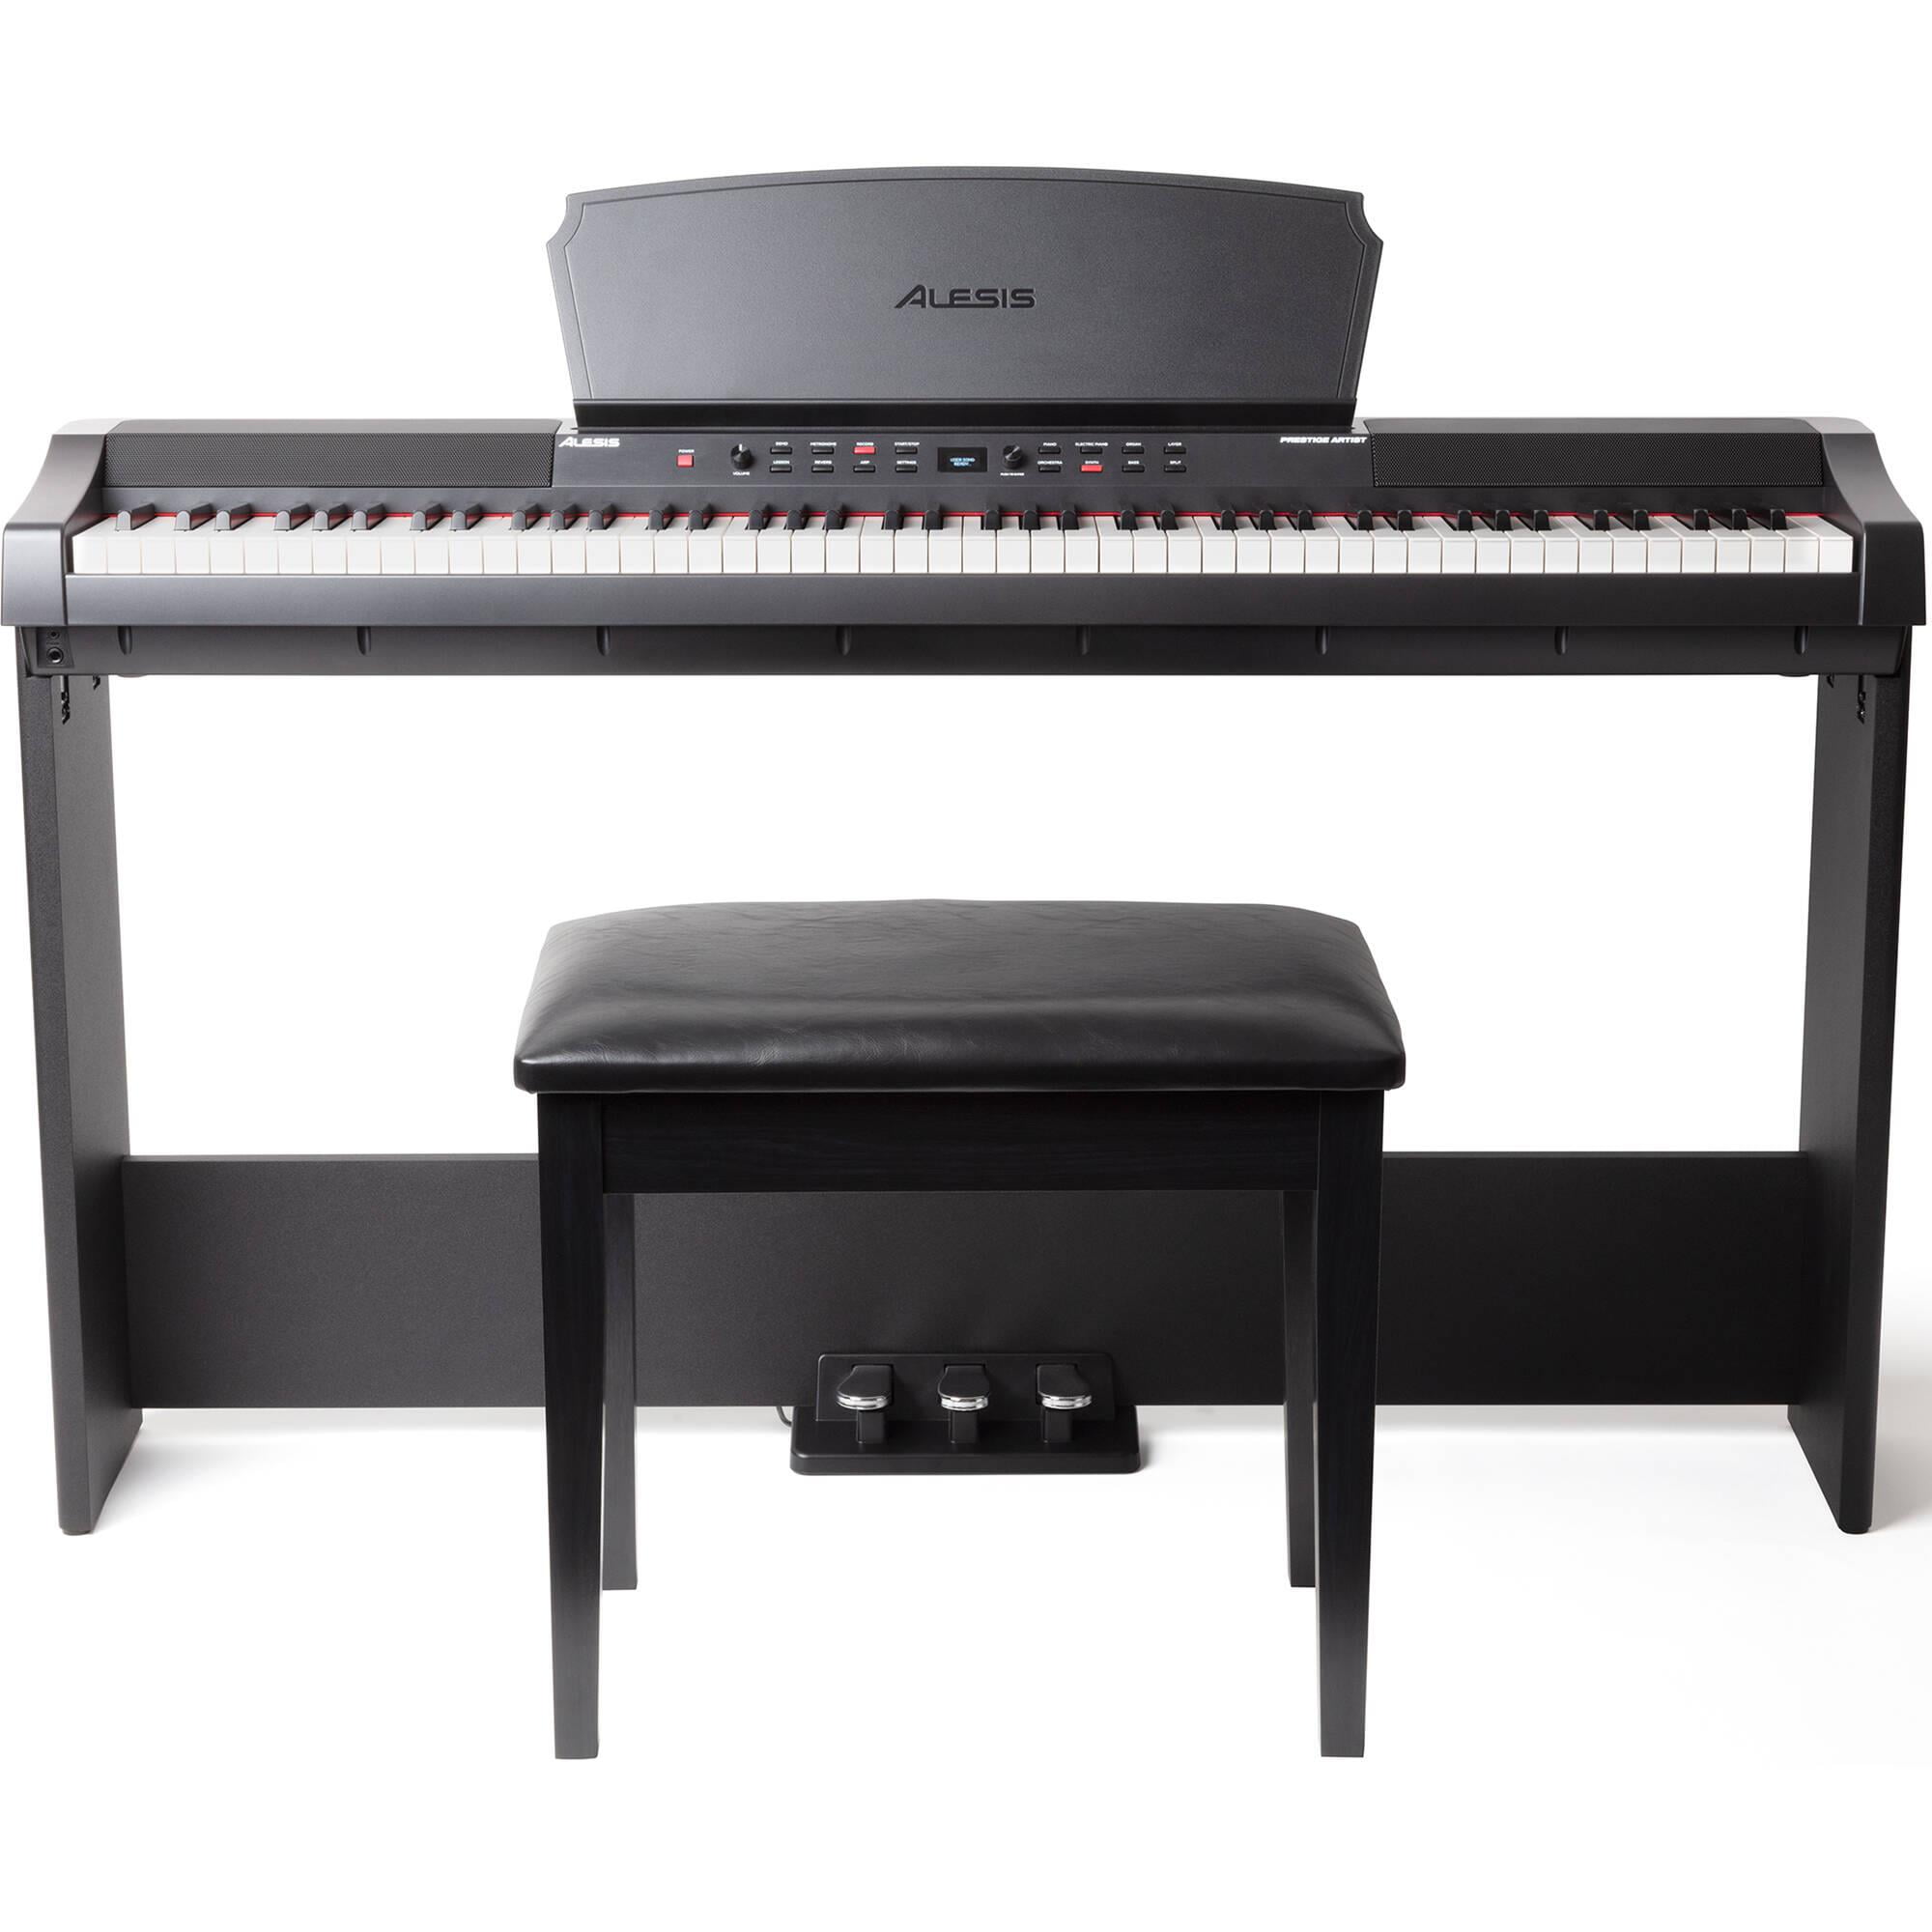 Review: 5 Reasons Alesis Prestige Artist is the Best Piano Keyboard under  $600